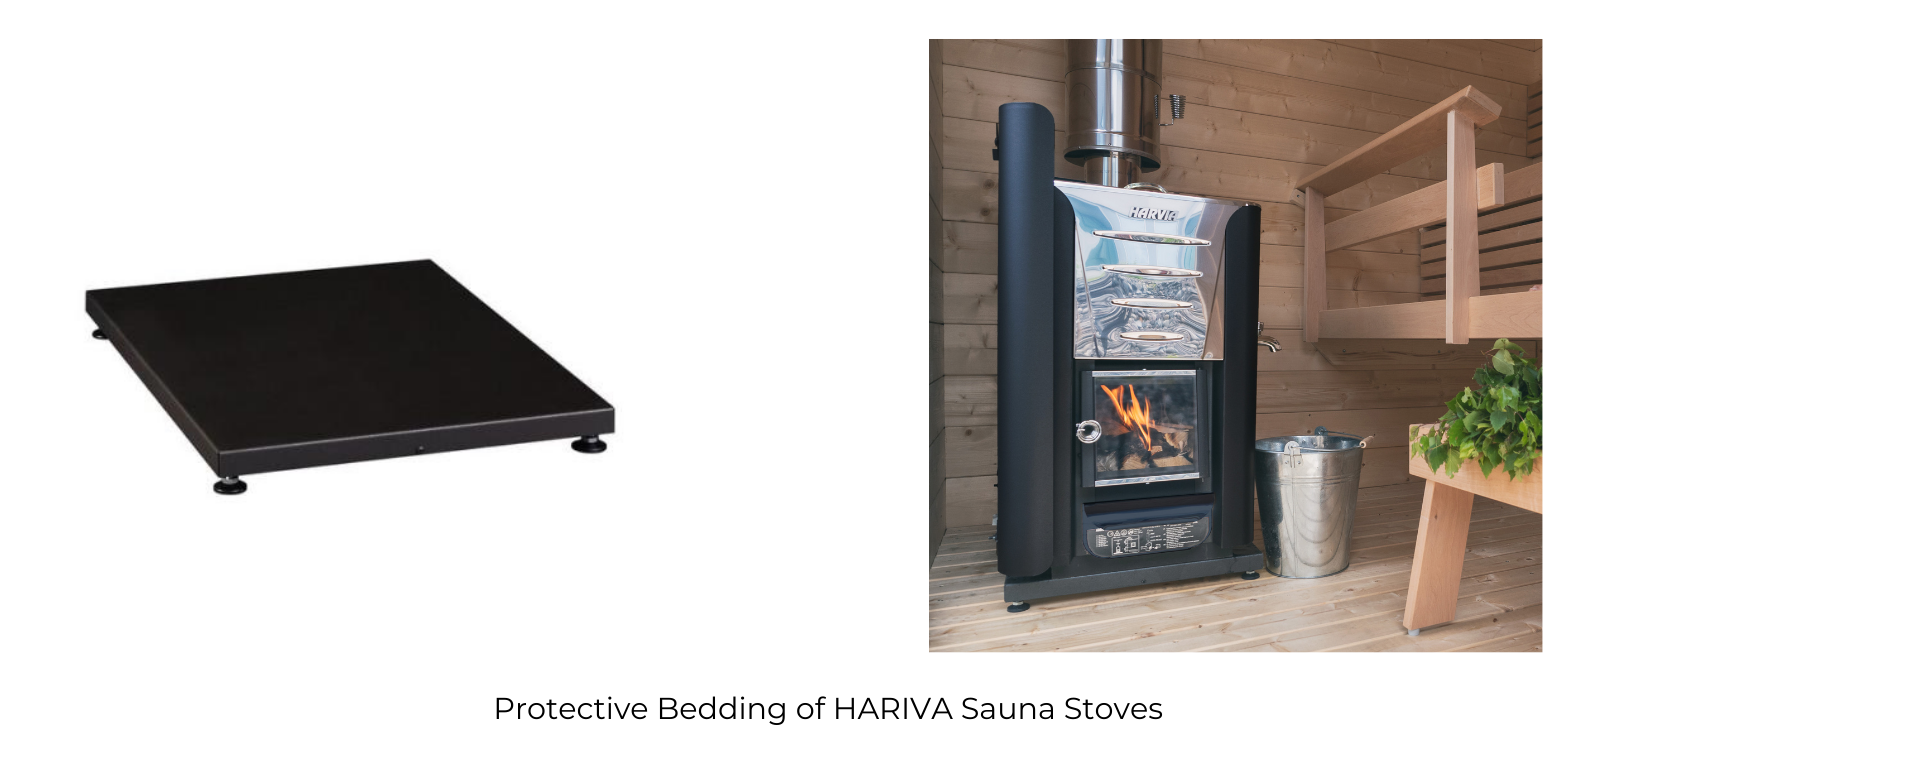 Harvia Linear 22 GreenFlame 15.7kW Wood Burning Sauna Stove